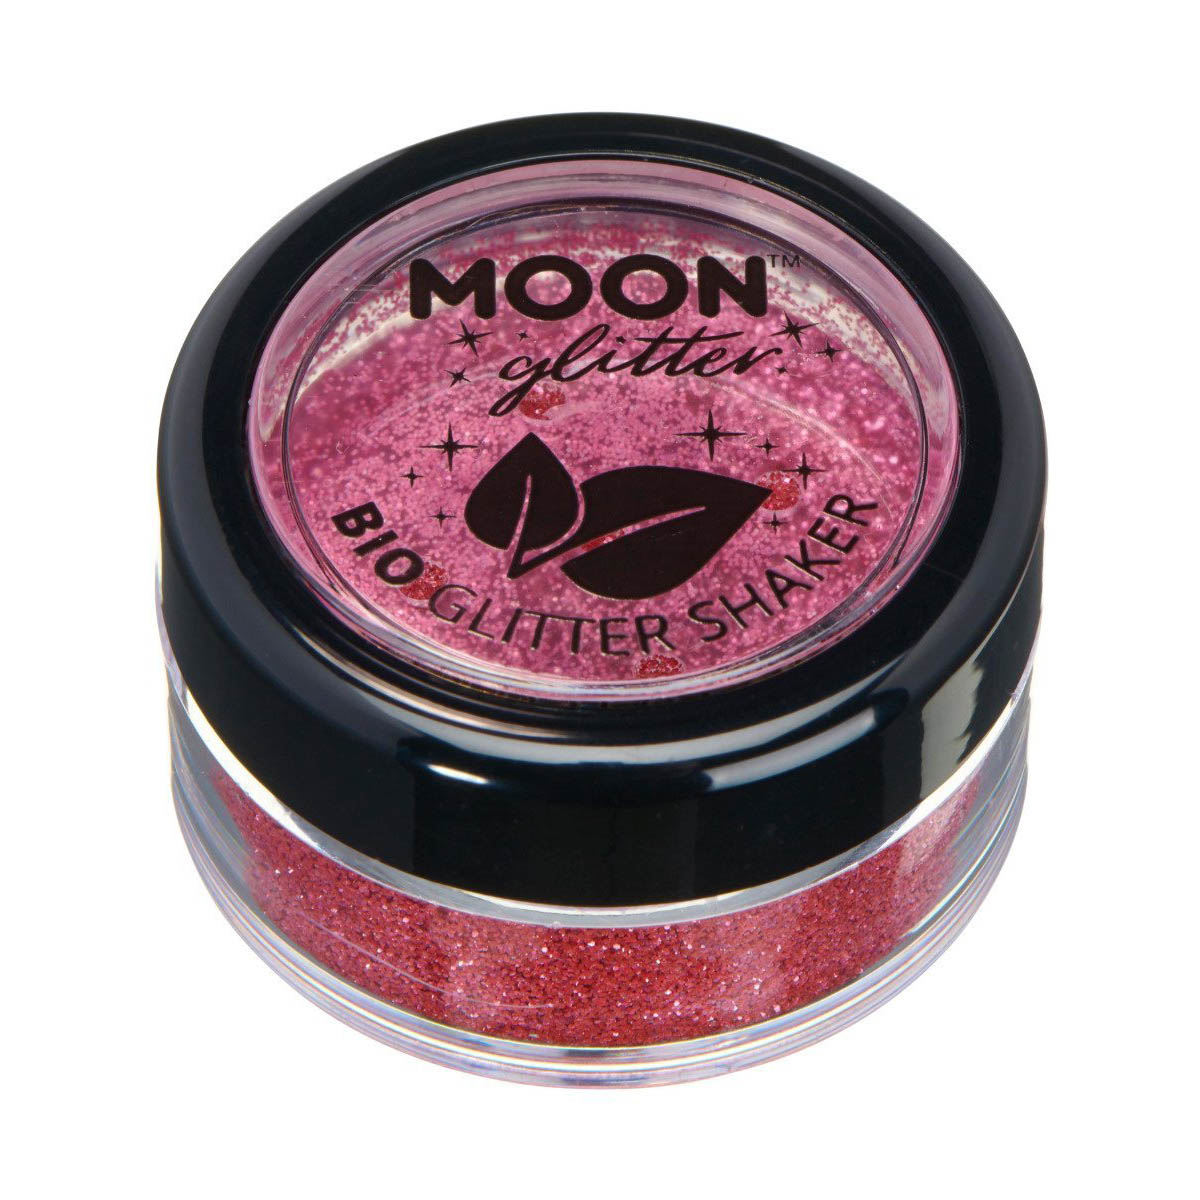 Moon glitter bio finkornigt shakers, 5g Rosa